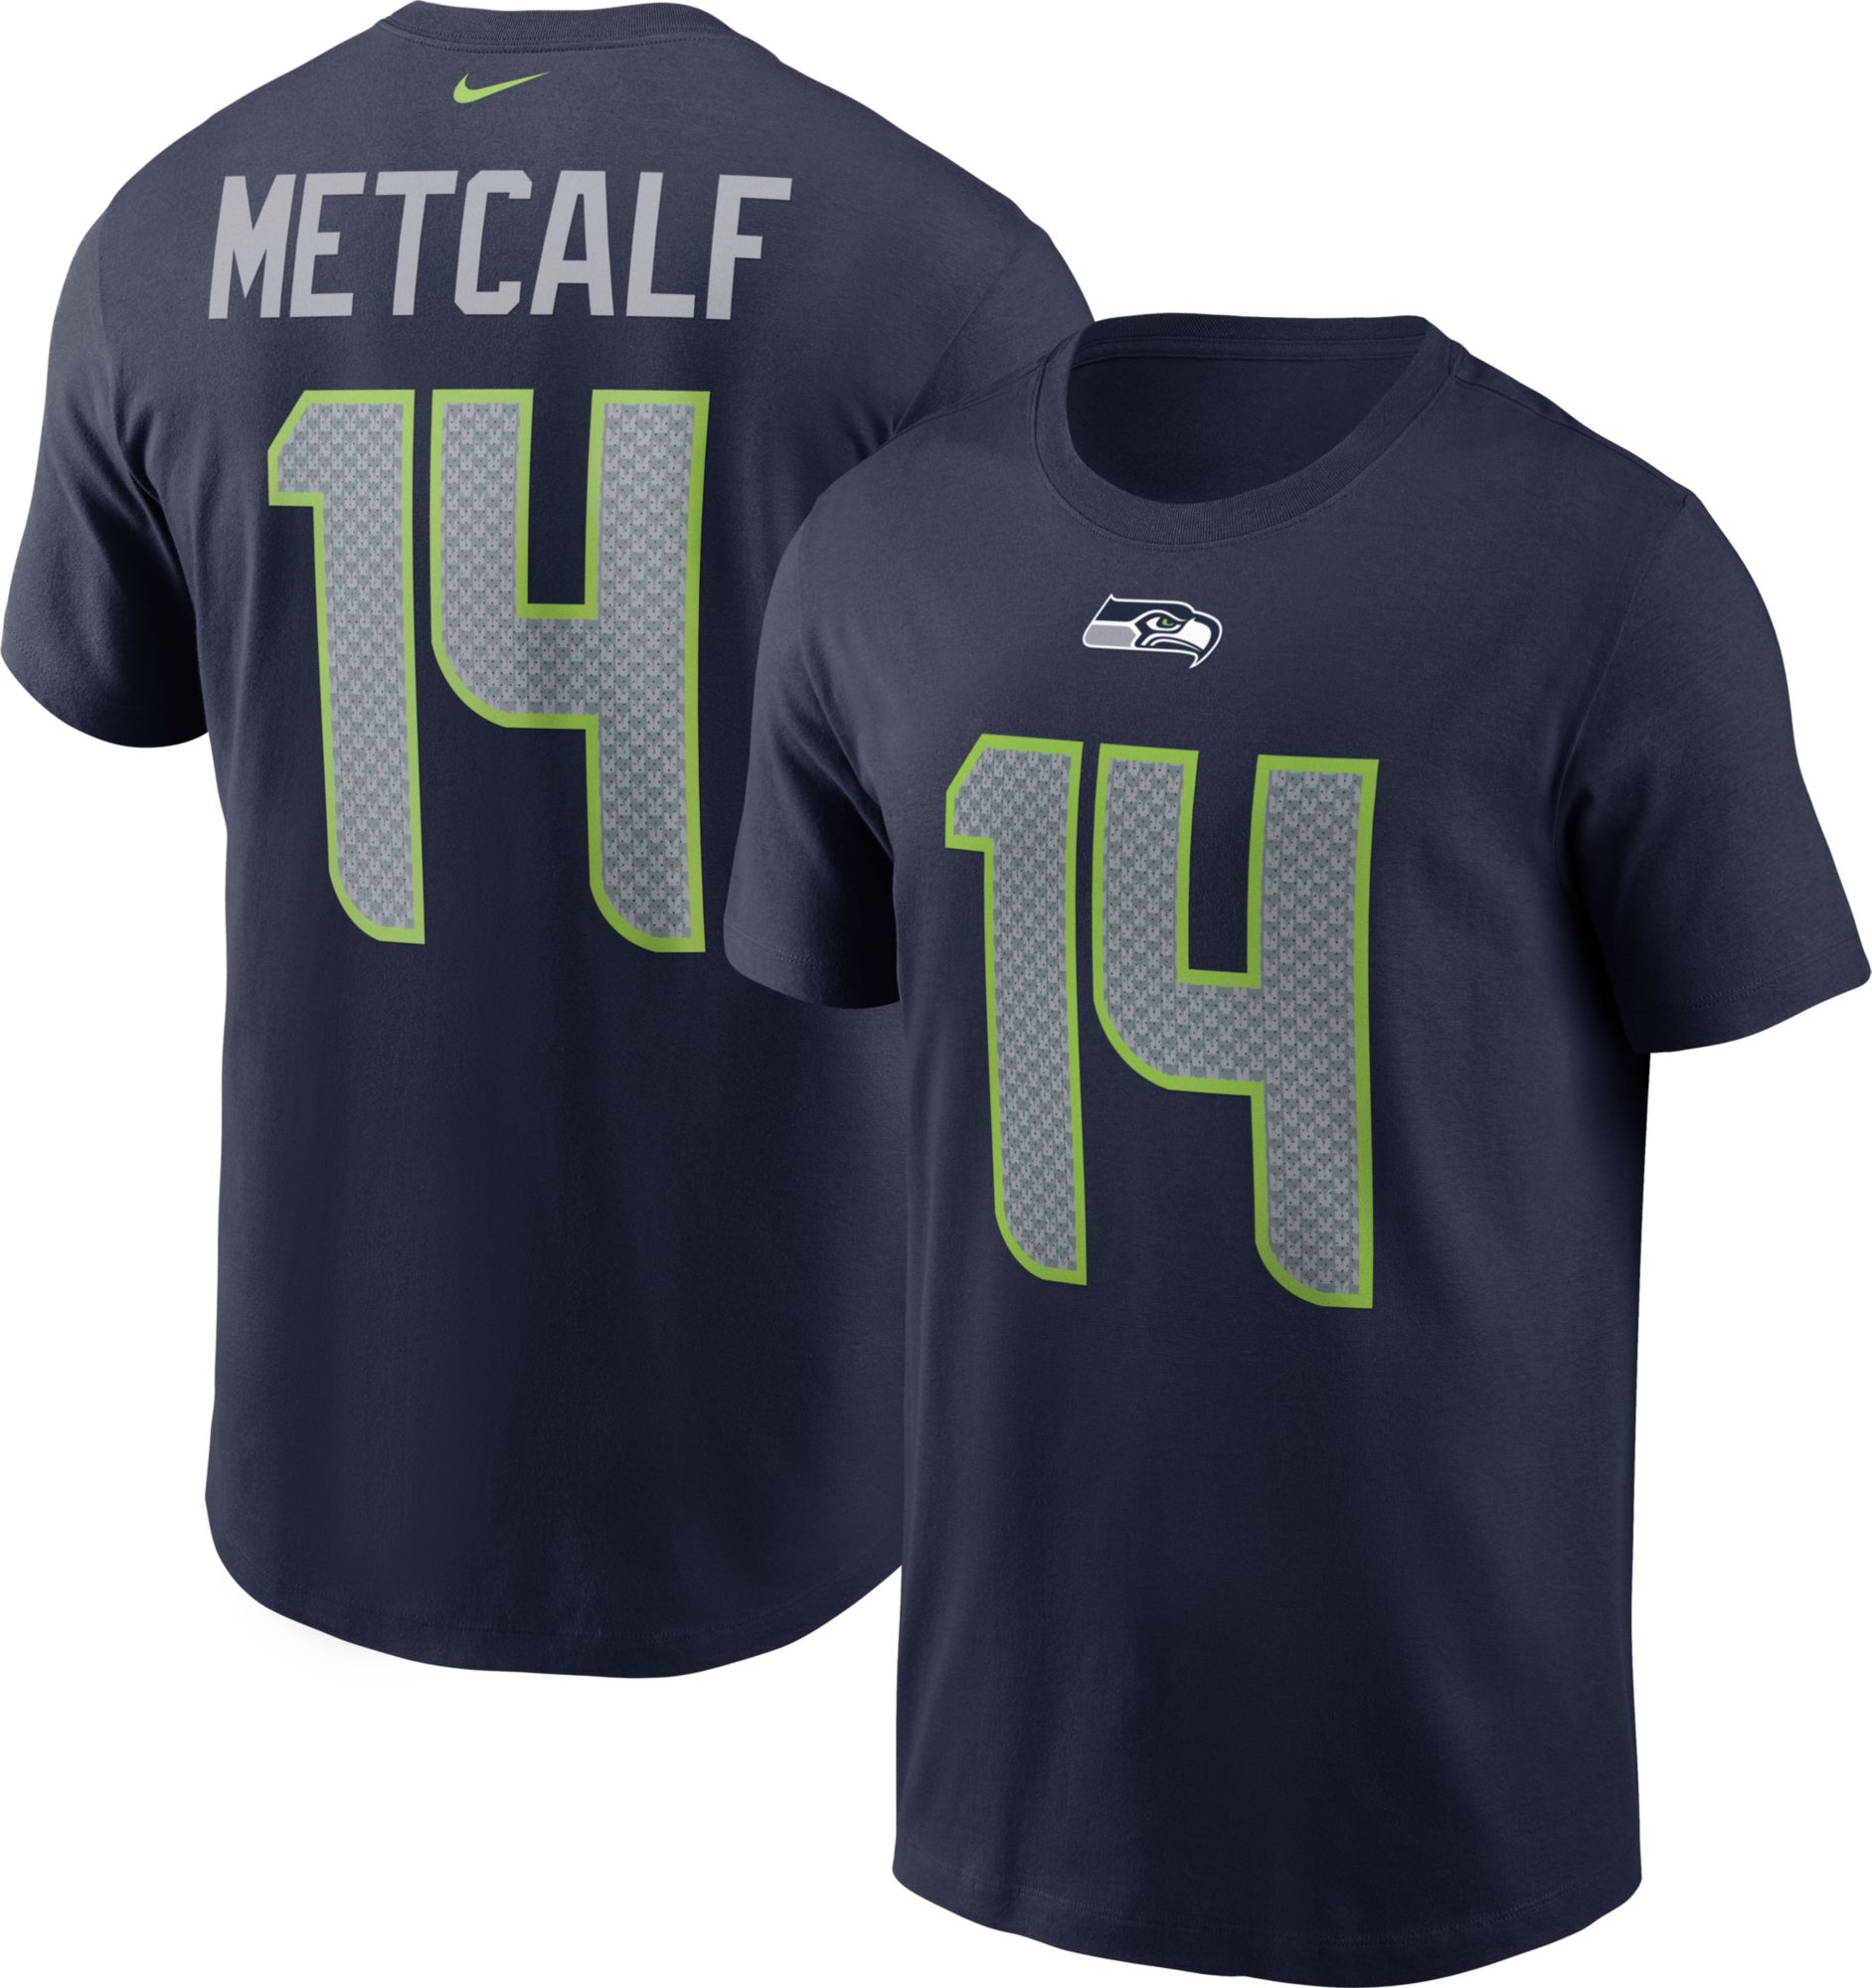 Blue Nike NFL Seattle Seahawks Metcalf #14 Team Jersey